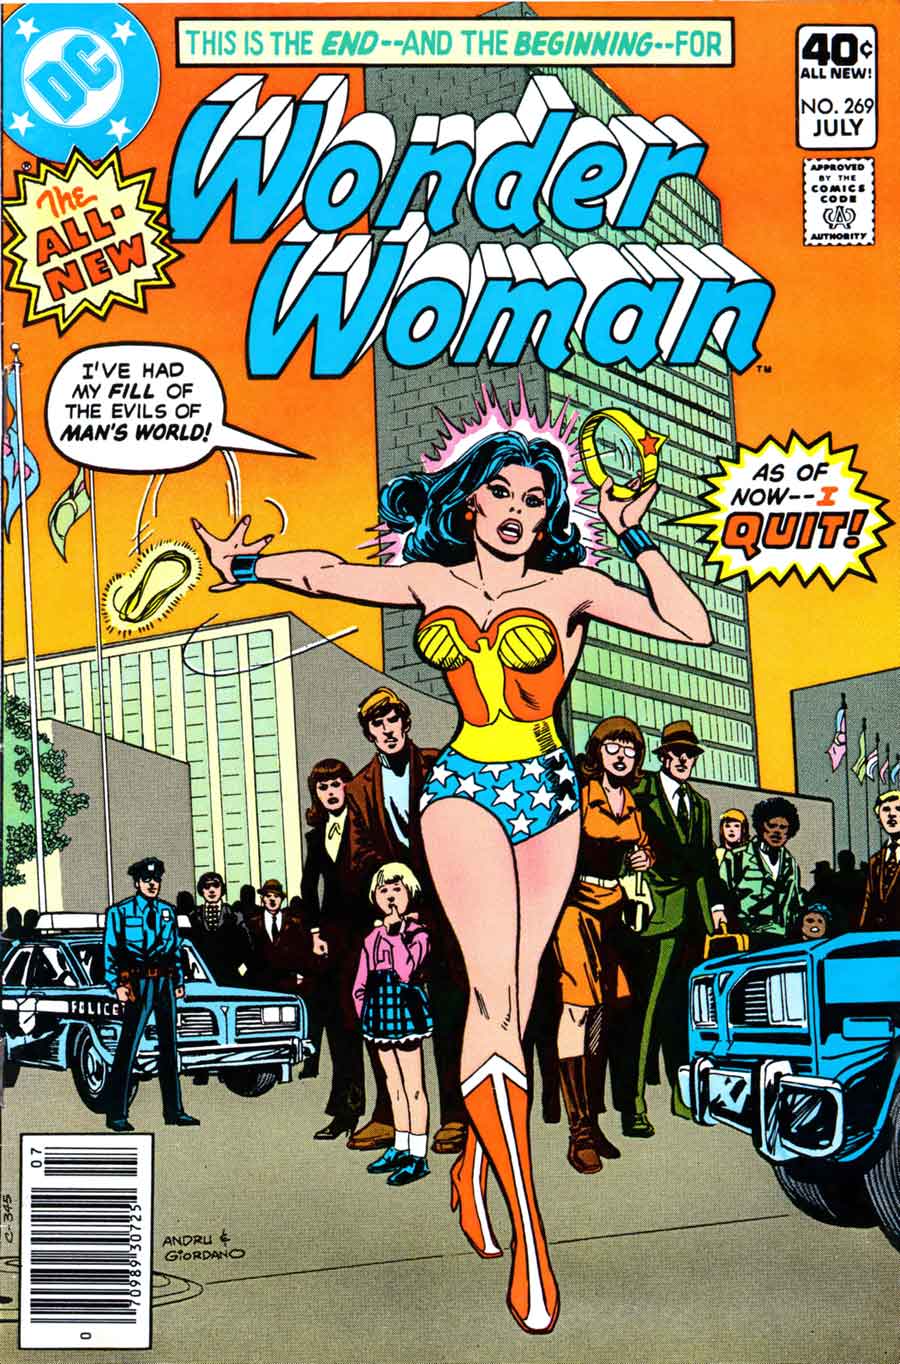 Wonder Woman #269 cover